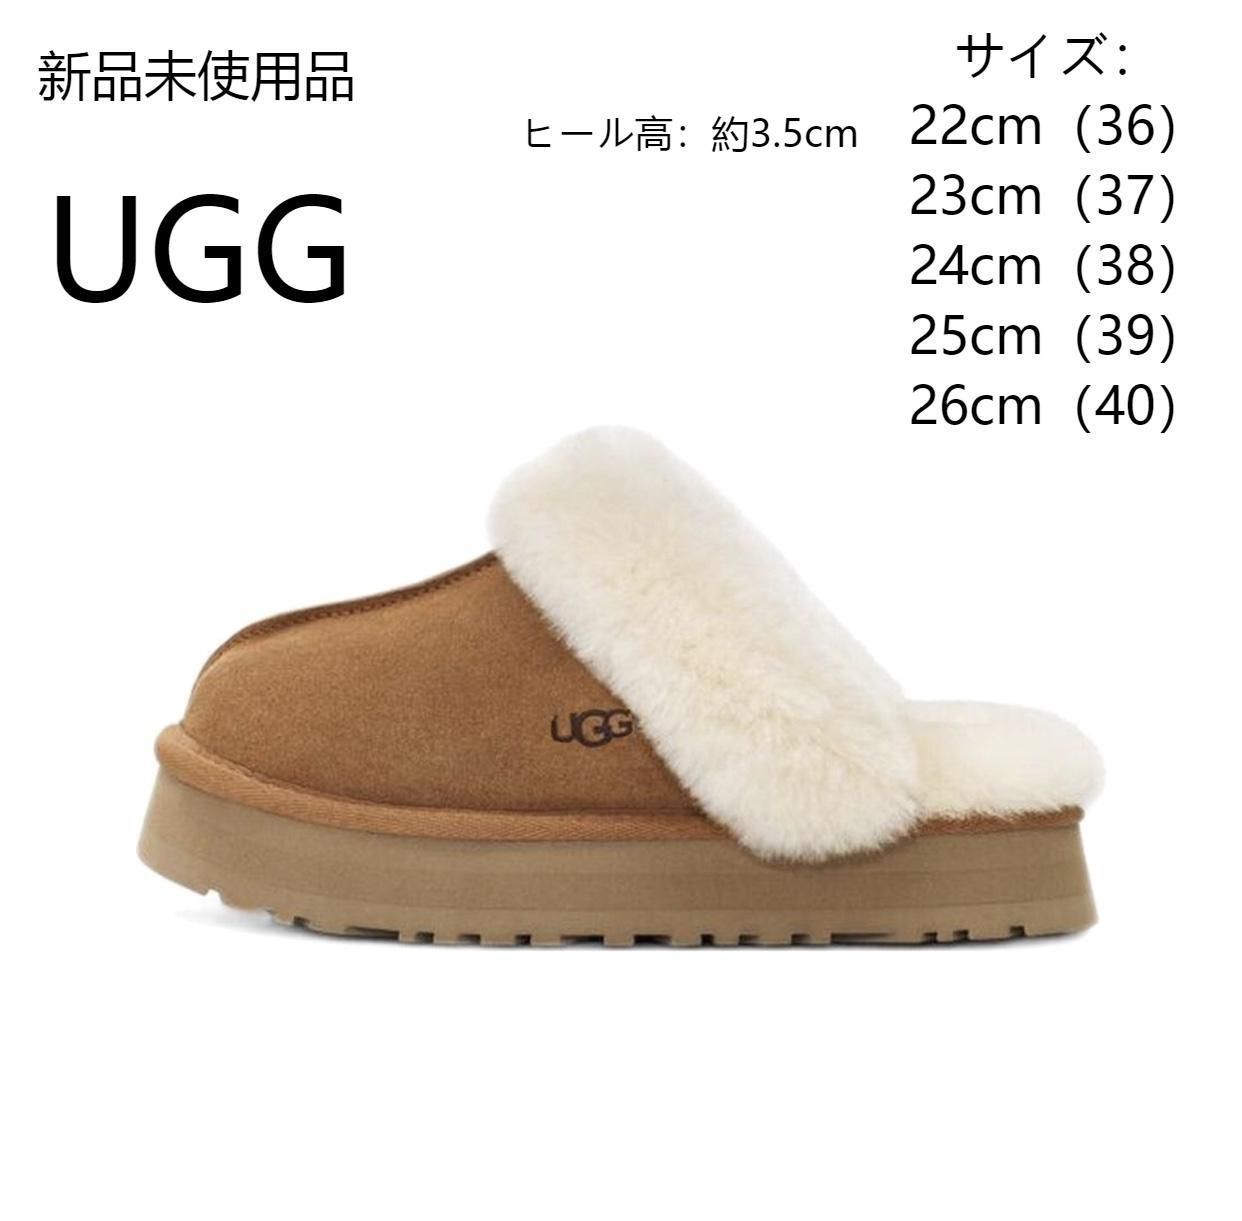 UGG スリッパ 25㎝ - 靴